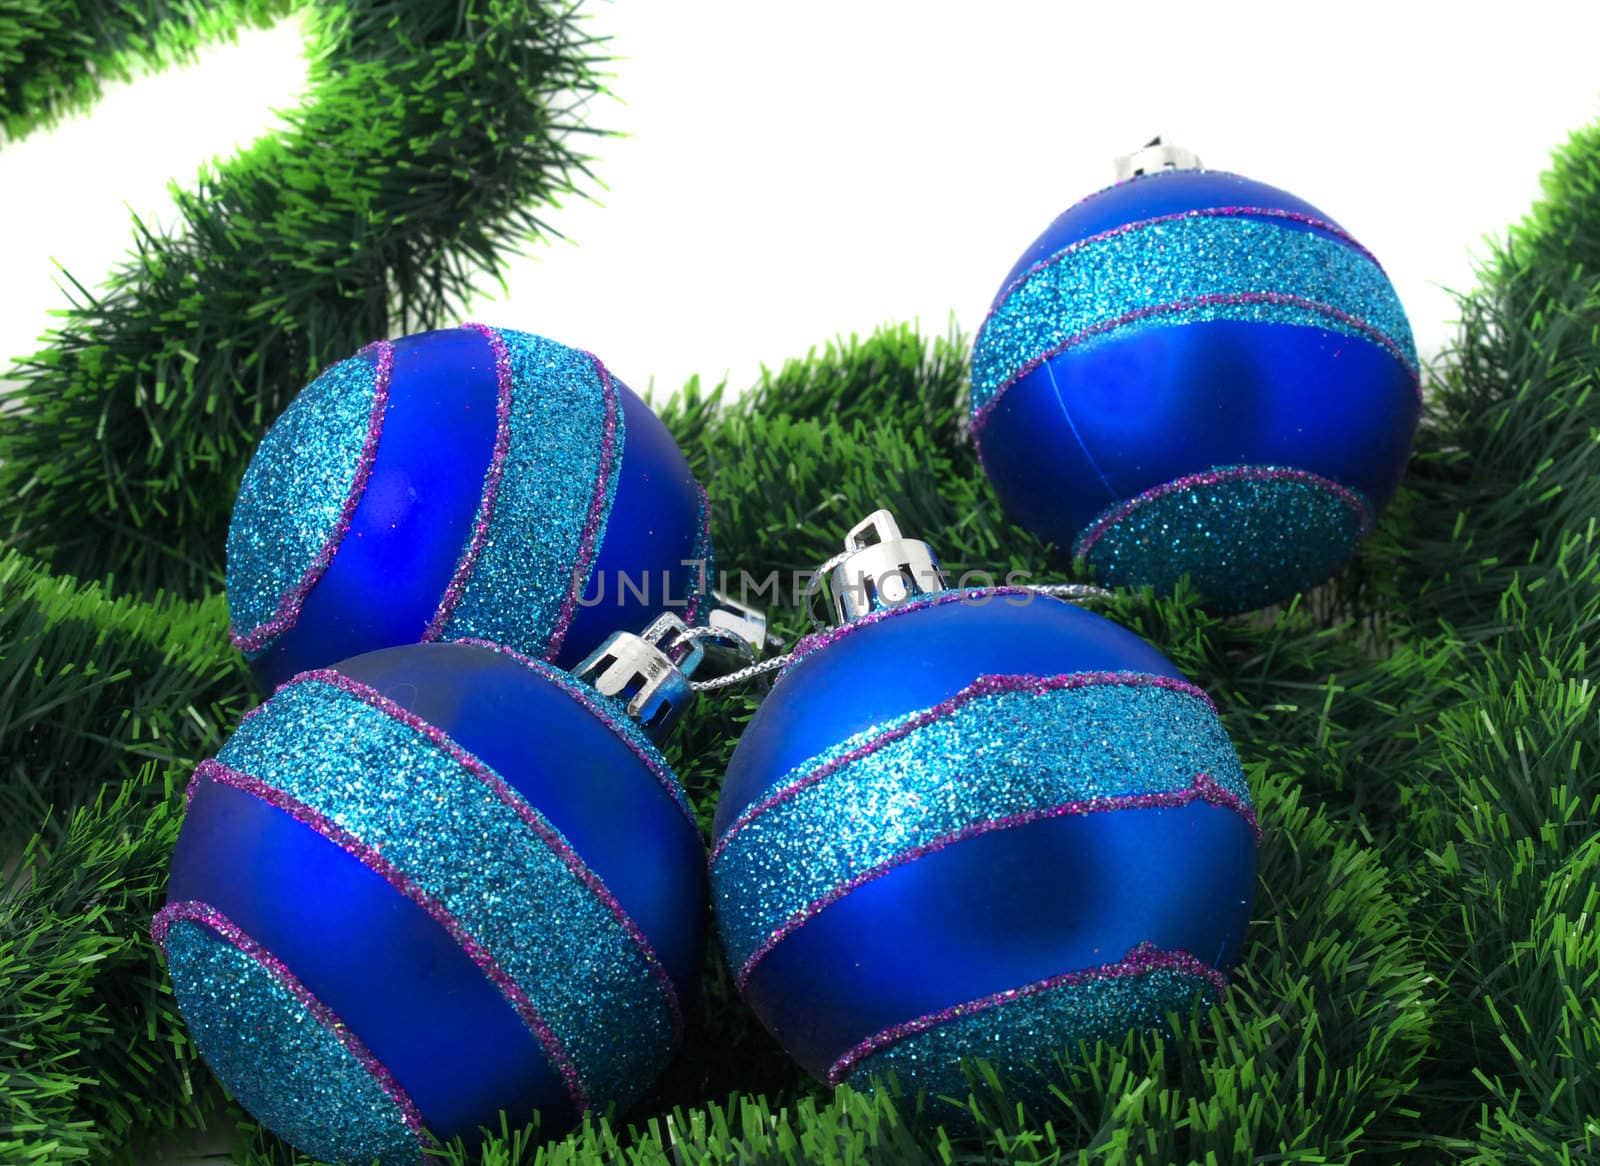 Christmas blue ornaments by K_Kot